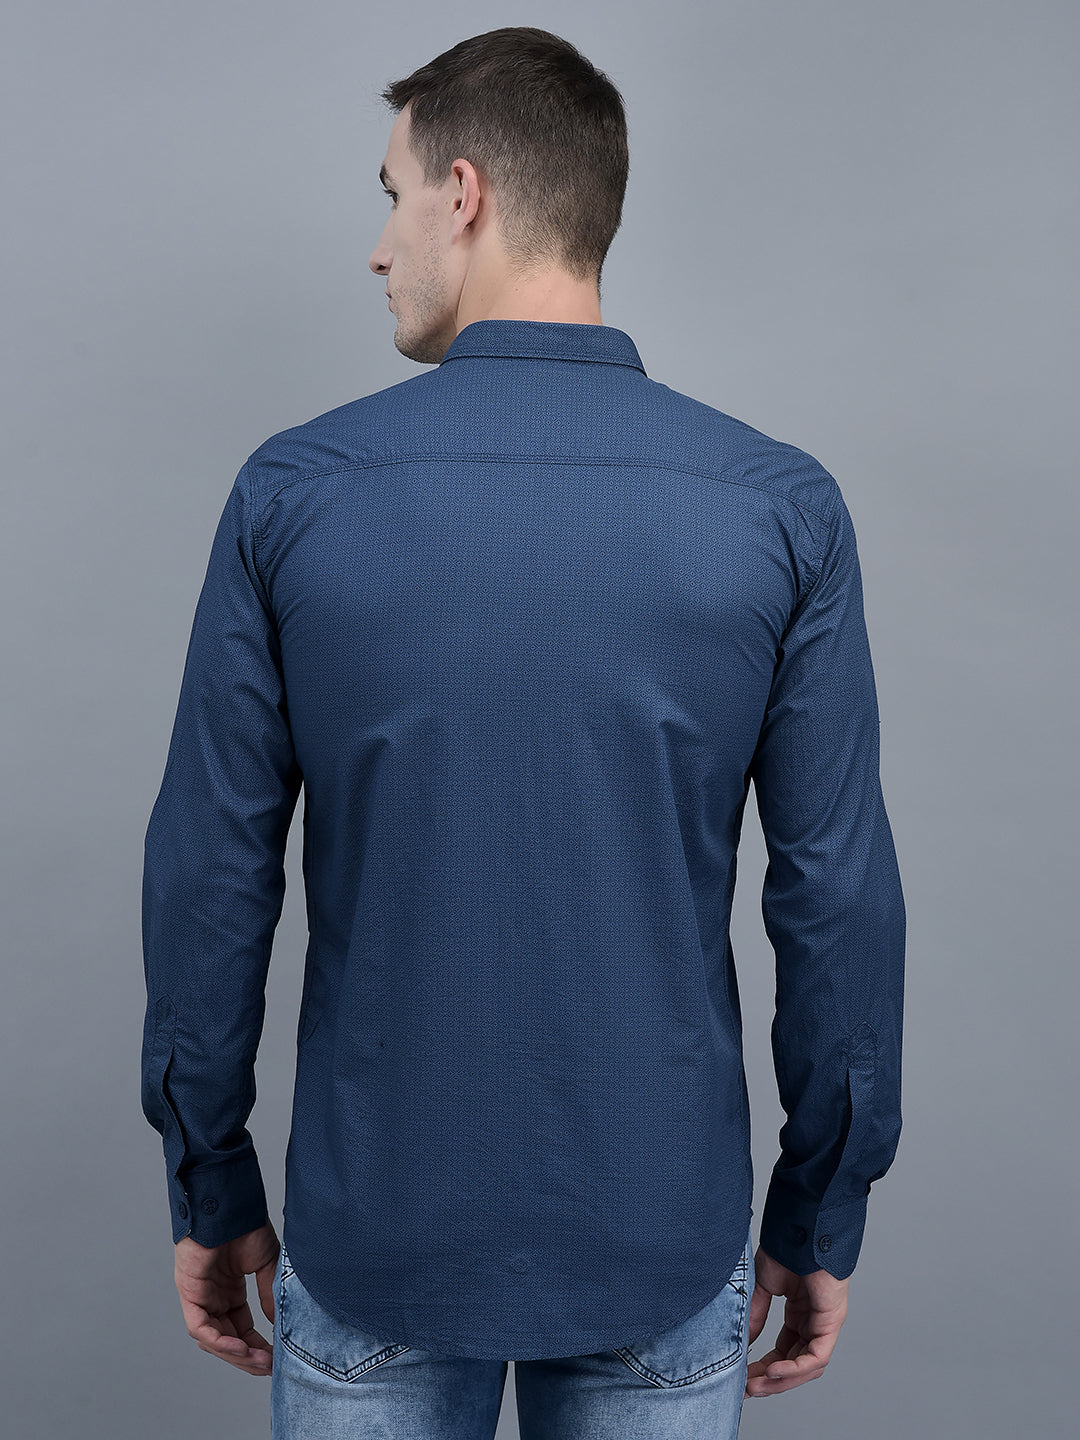 Cobb Navy Blue Printed Slim Fit Casual Shirt